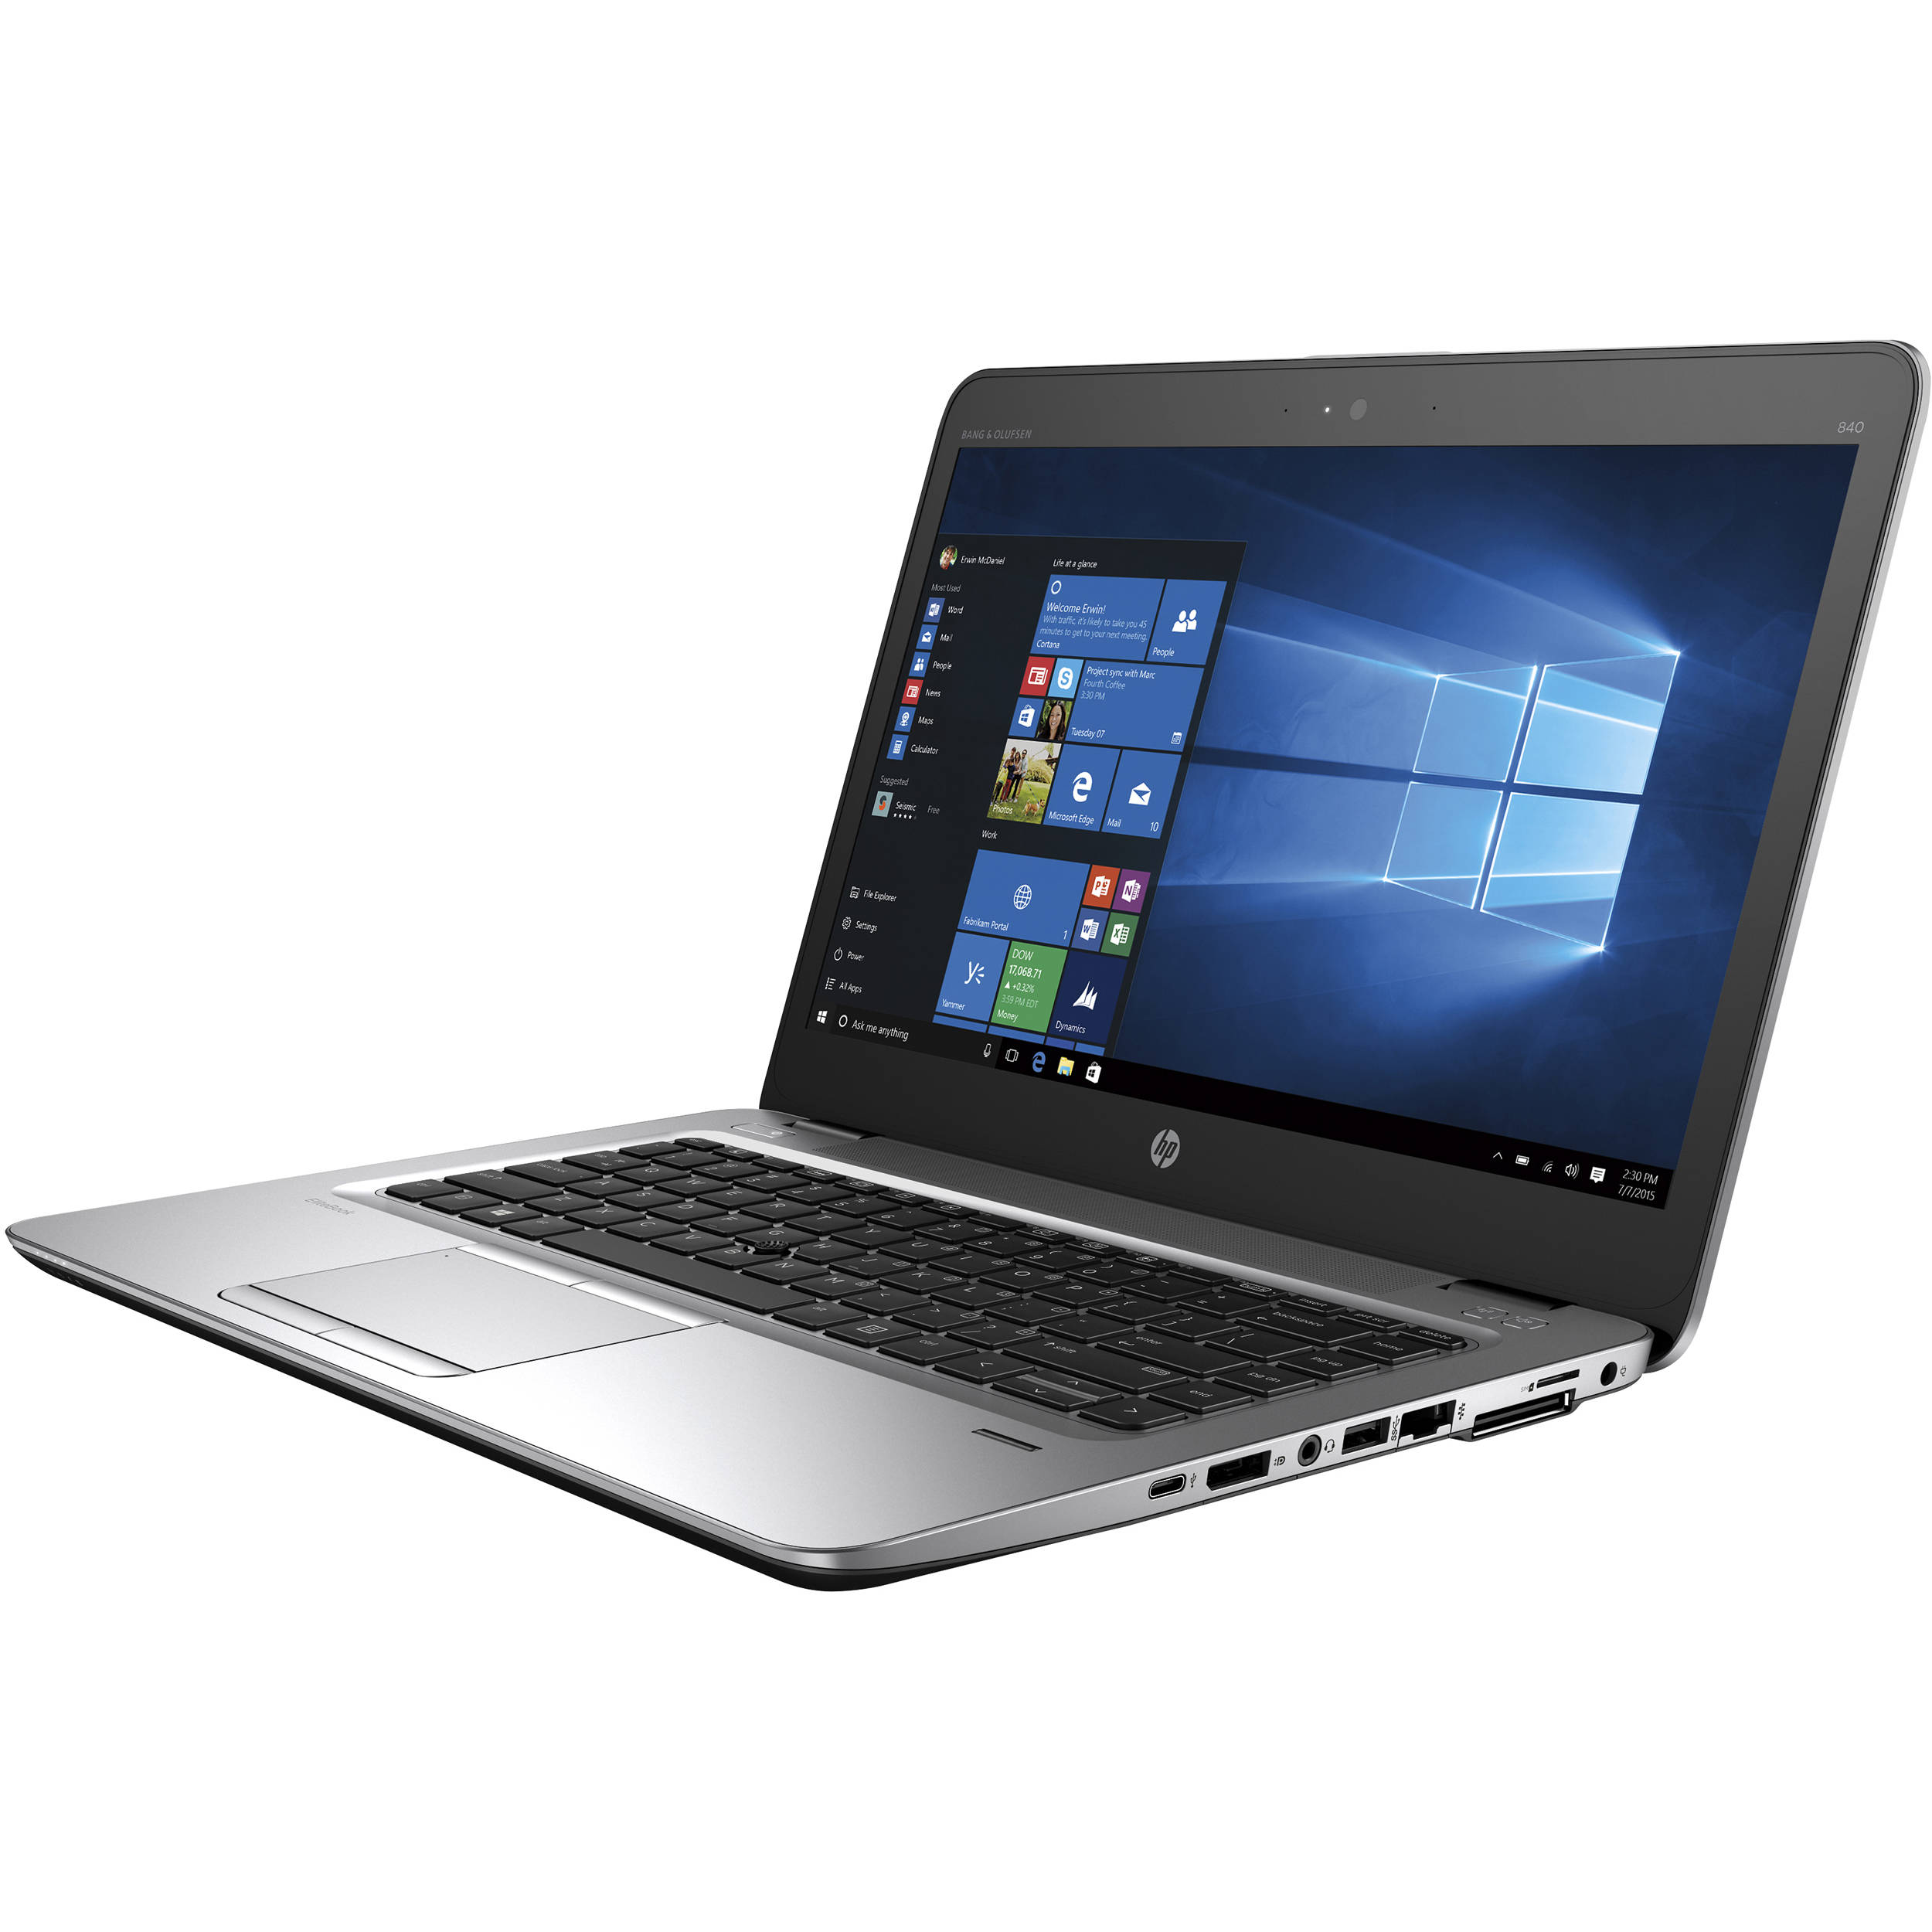 Hp Elitebook 840 G3 Laptop Intel Core i5 2.40 GHz 8GB Ram 256GB SSD Windows 10 Pro - Scratch and Dent (Refurbished) - image 2 of 6